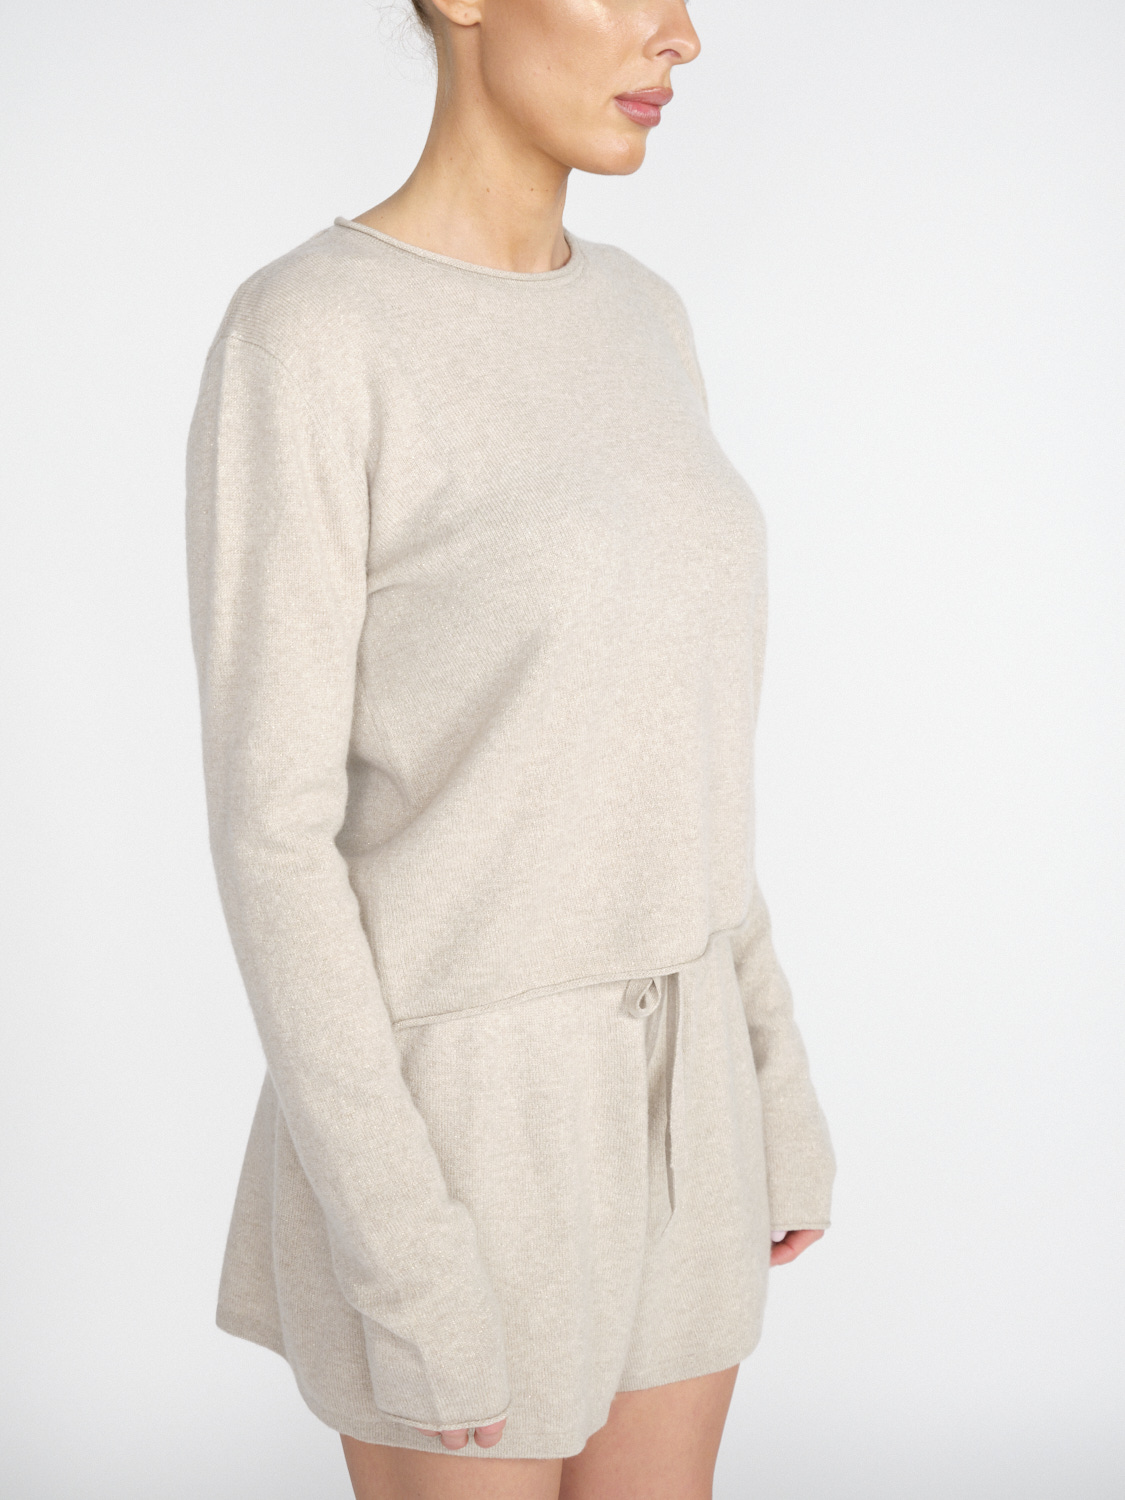 Lisa Yang Ida - Lightweight cashmere jumper with glitter effects  beige XS/S